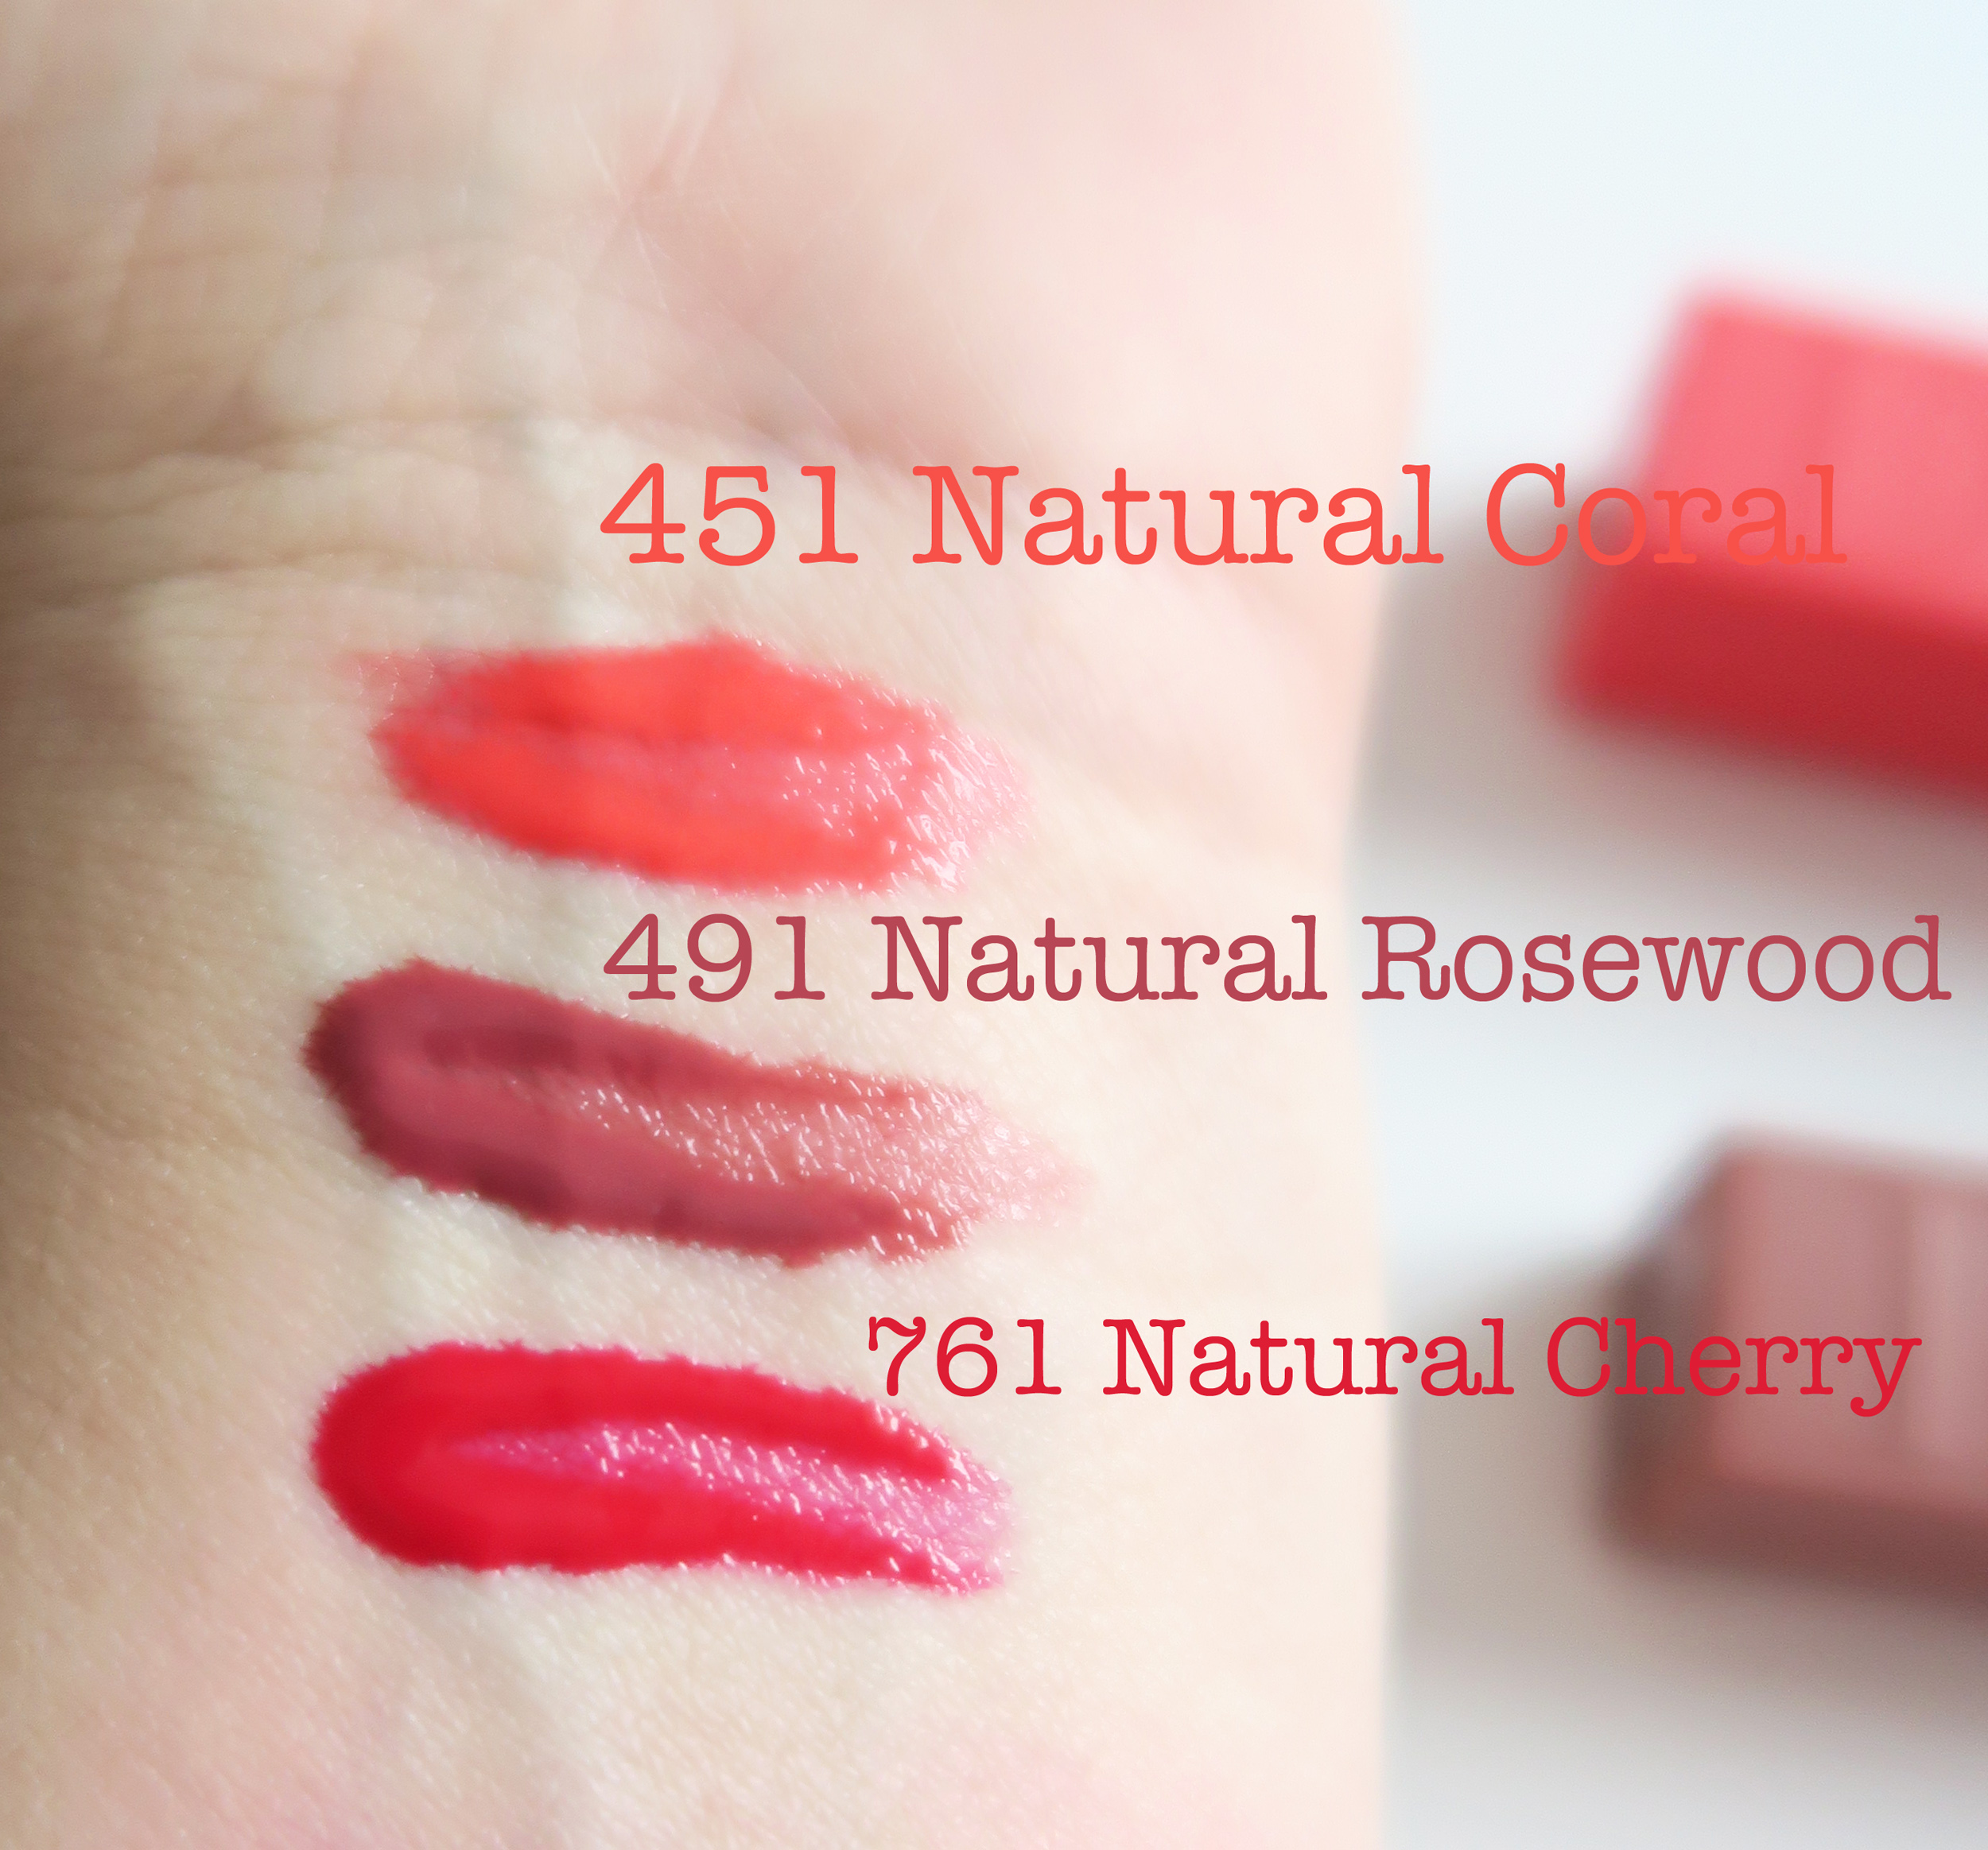 dior addict lip tattoo 451 natural coral